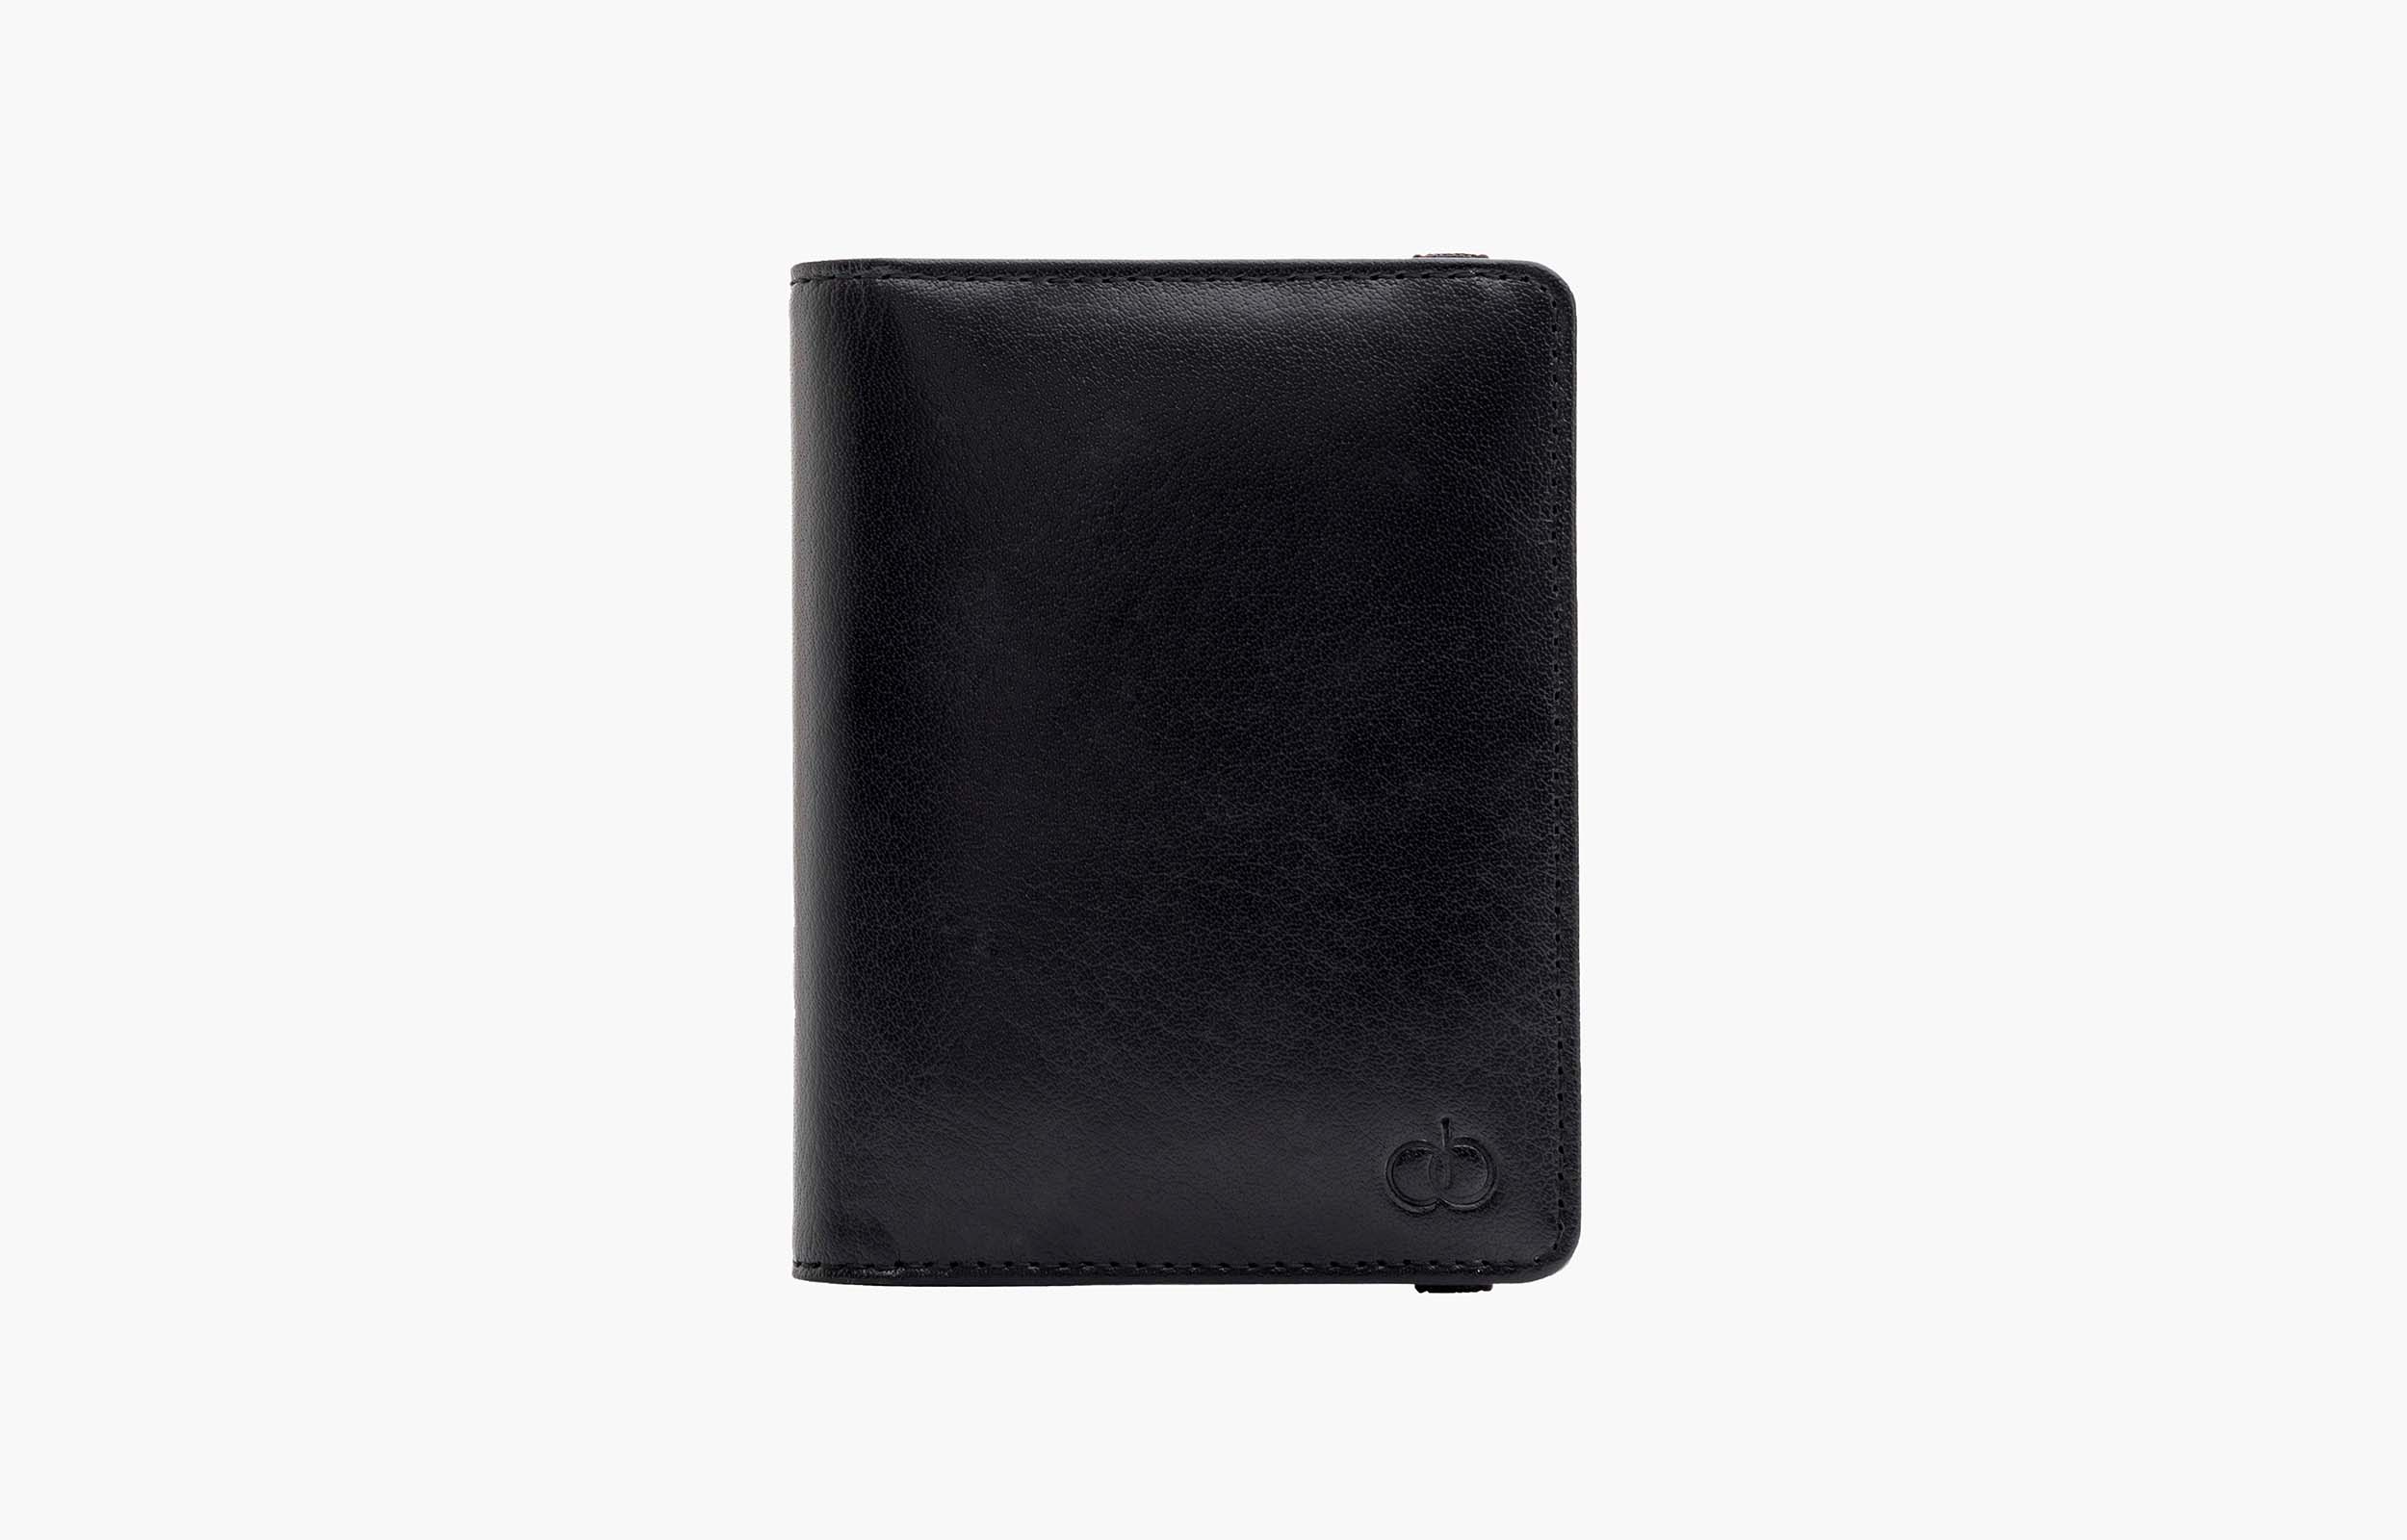 Agent Midnight Black Leather Card Holder UK 1